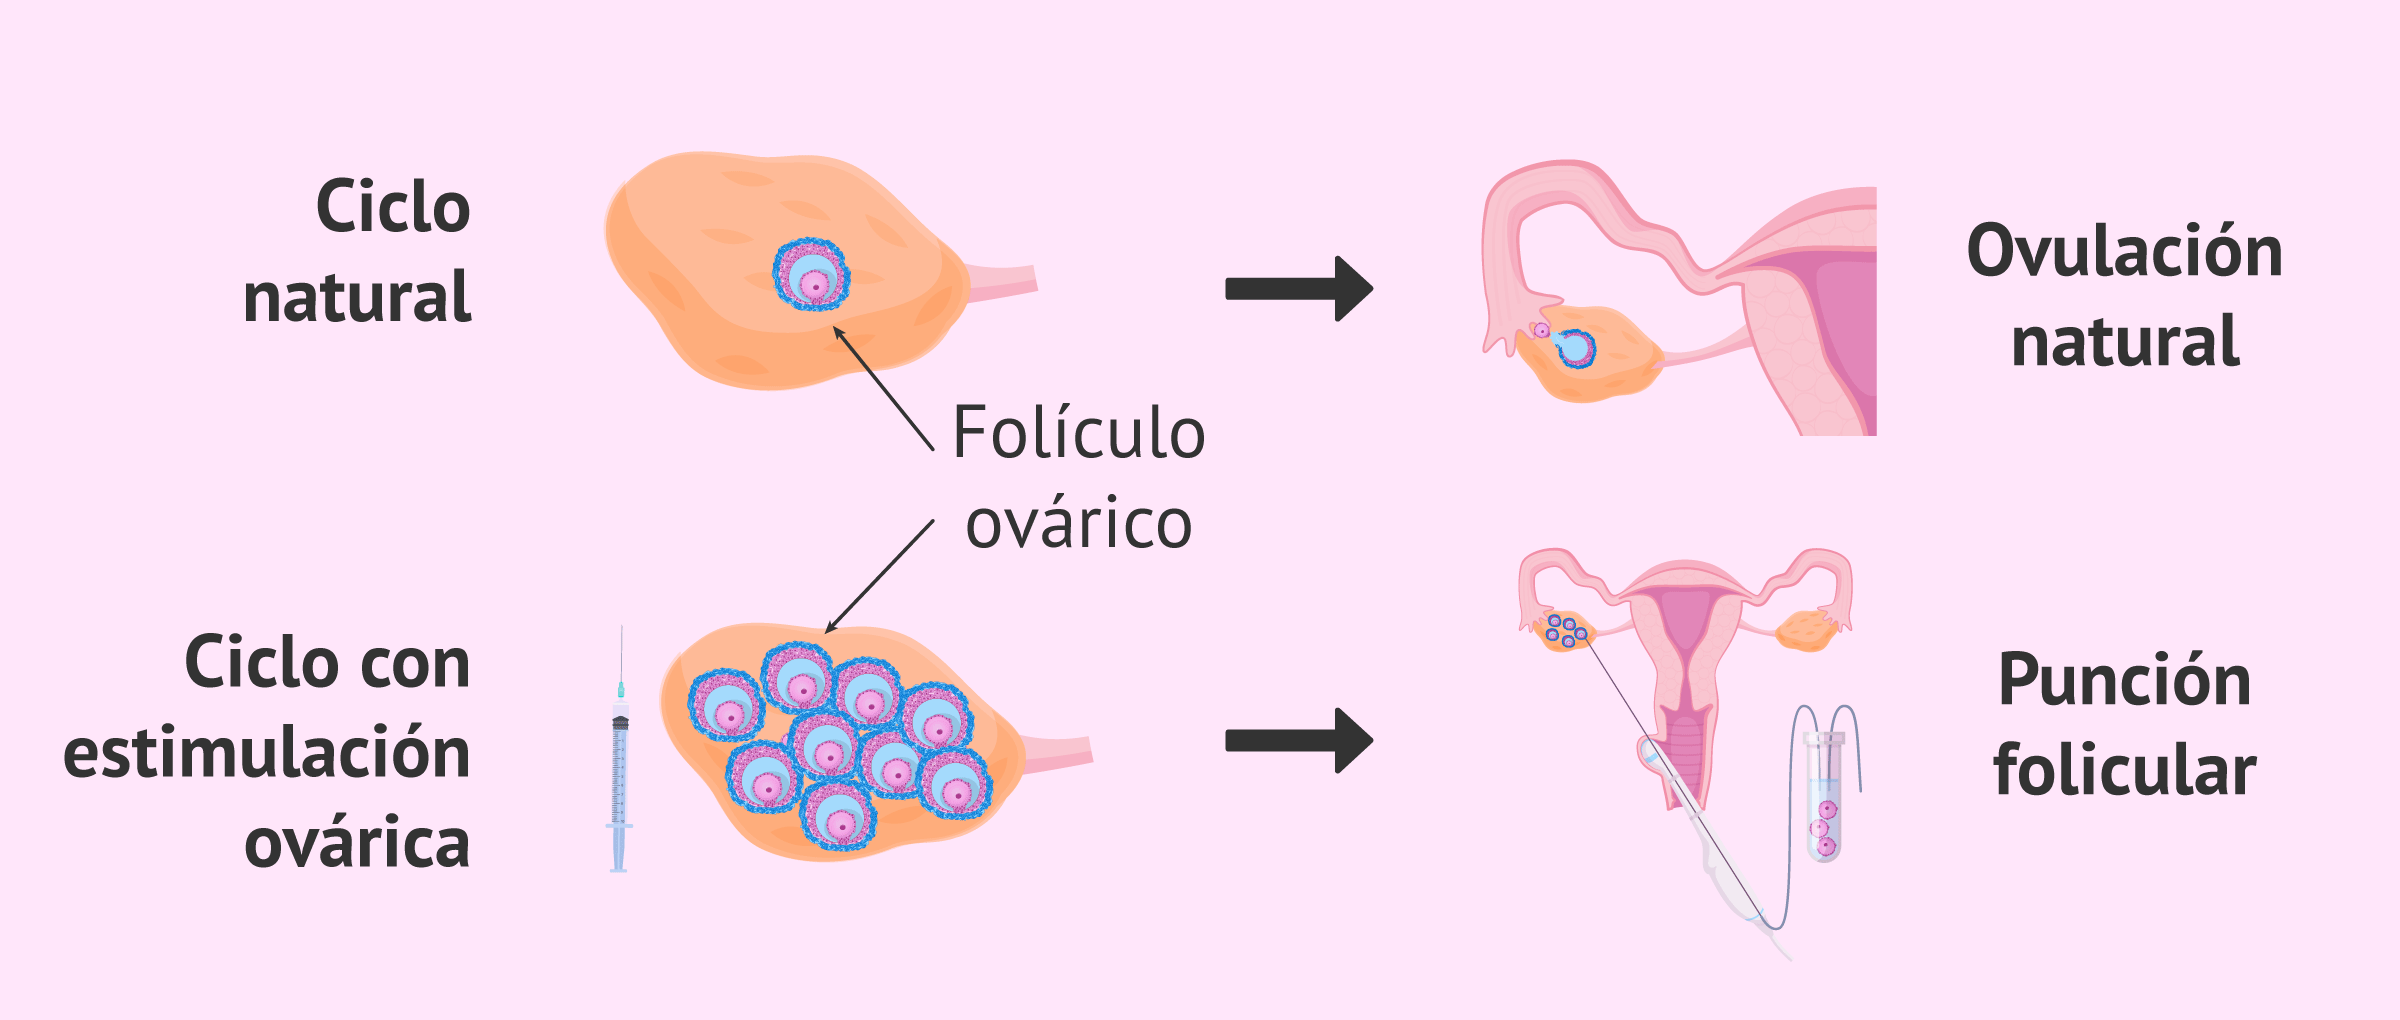 Ciclo ovarico duracion